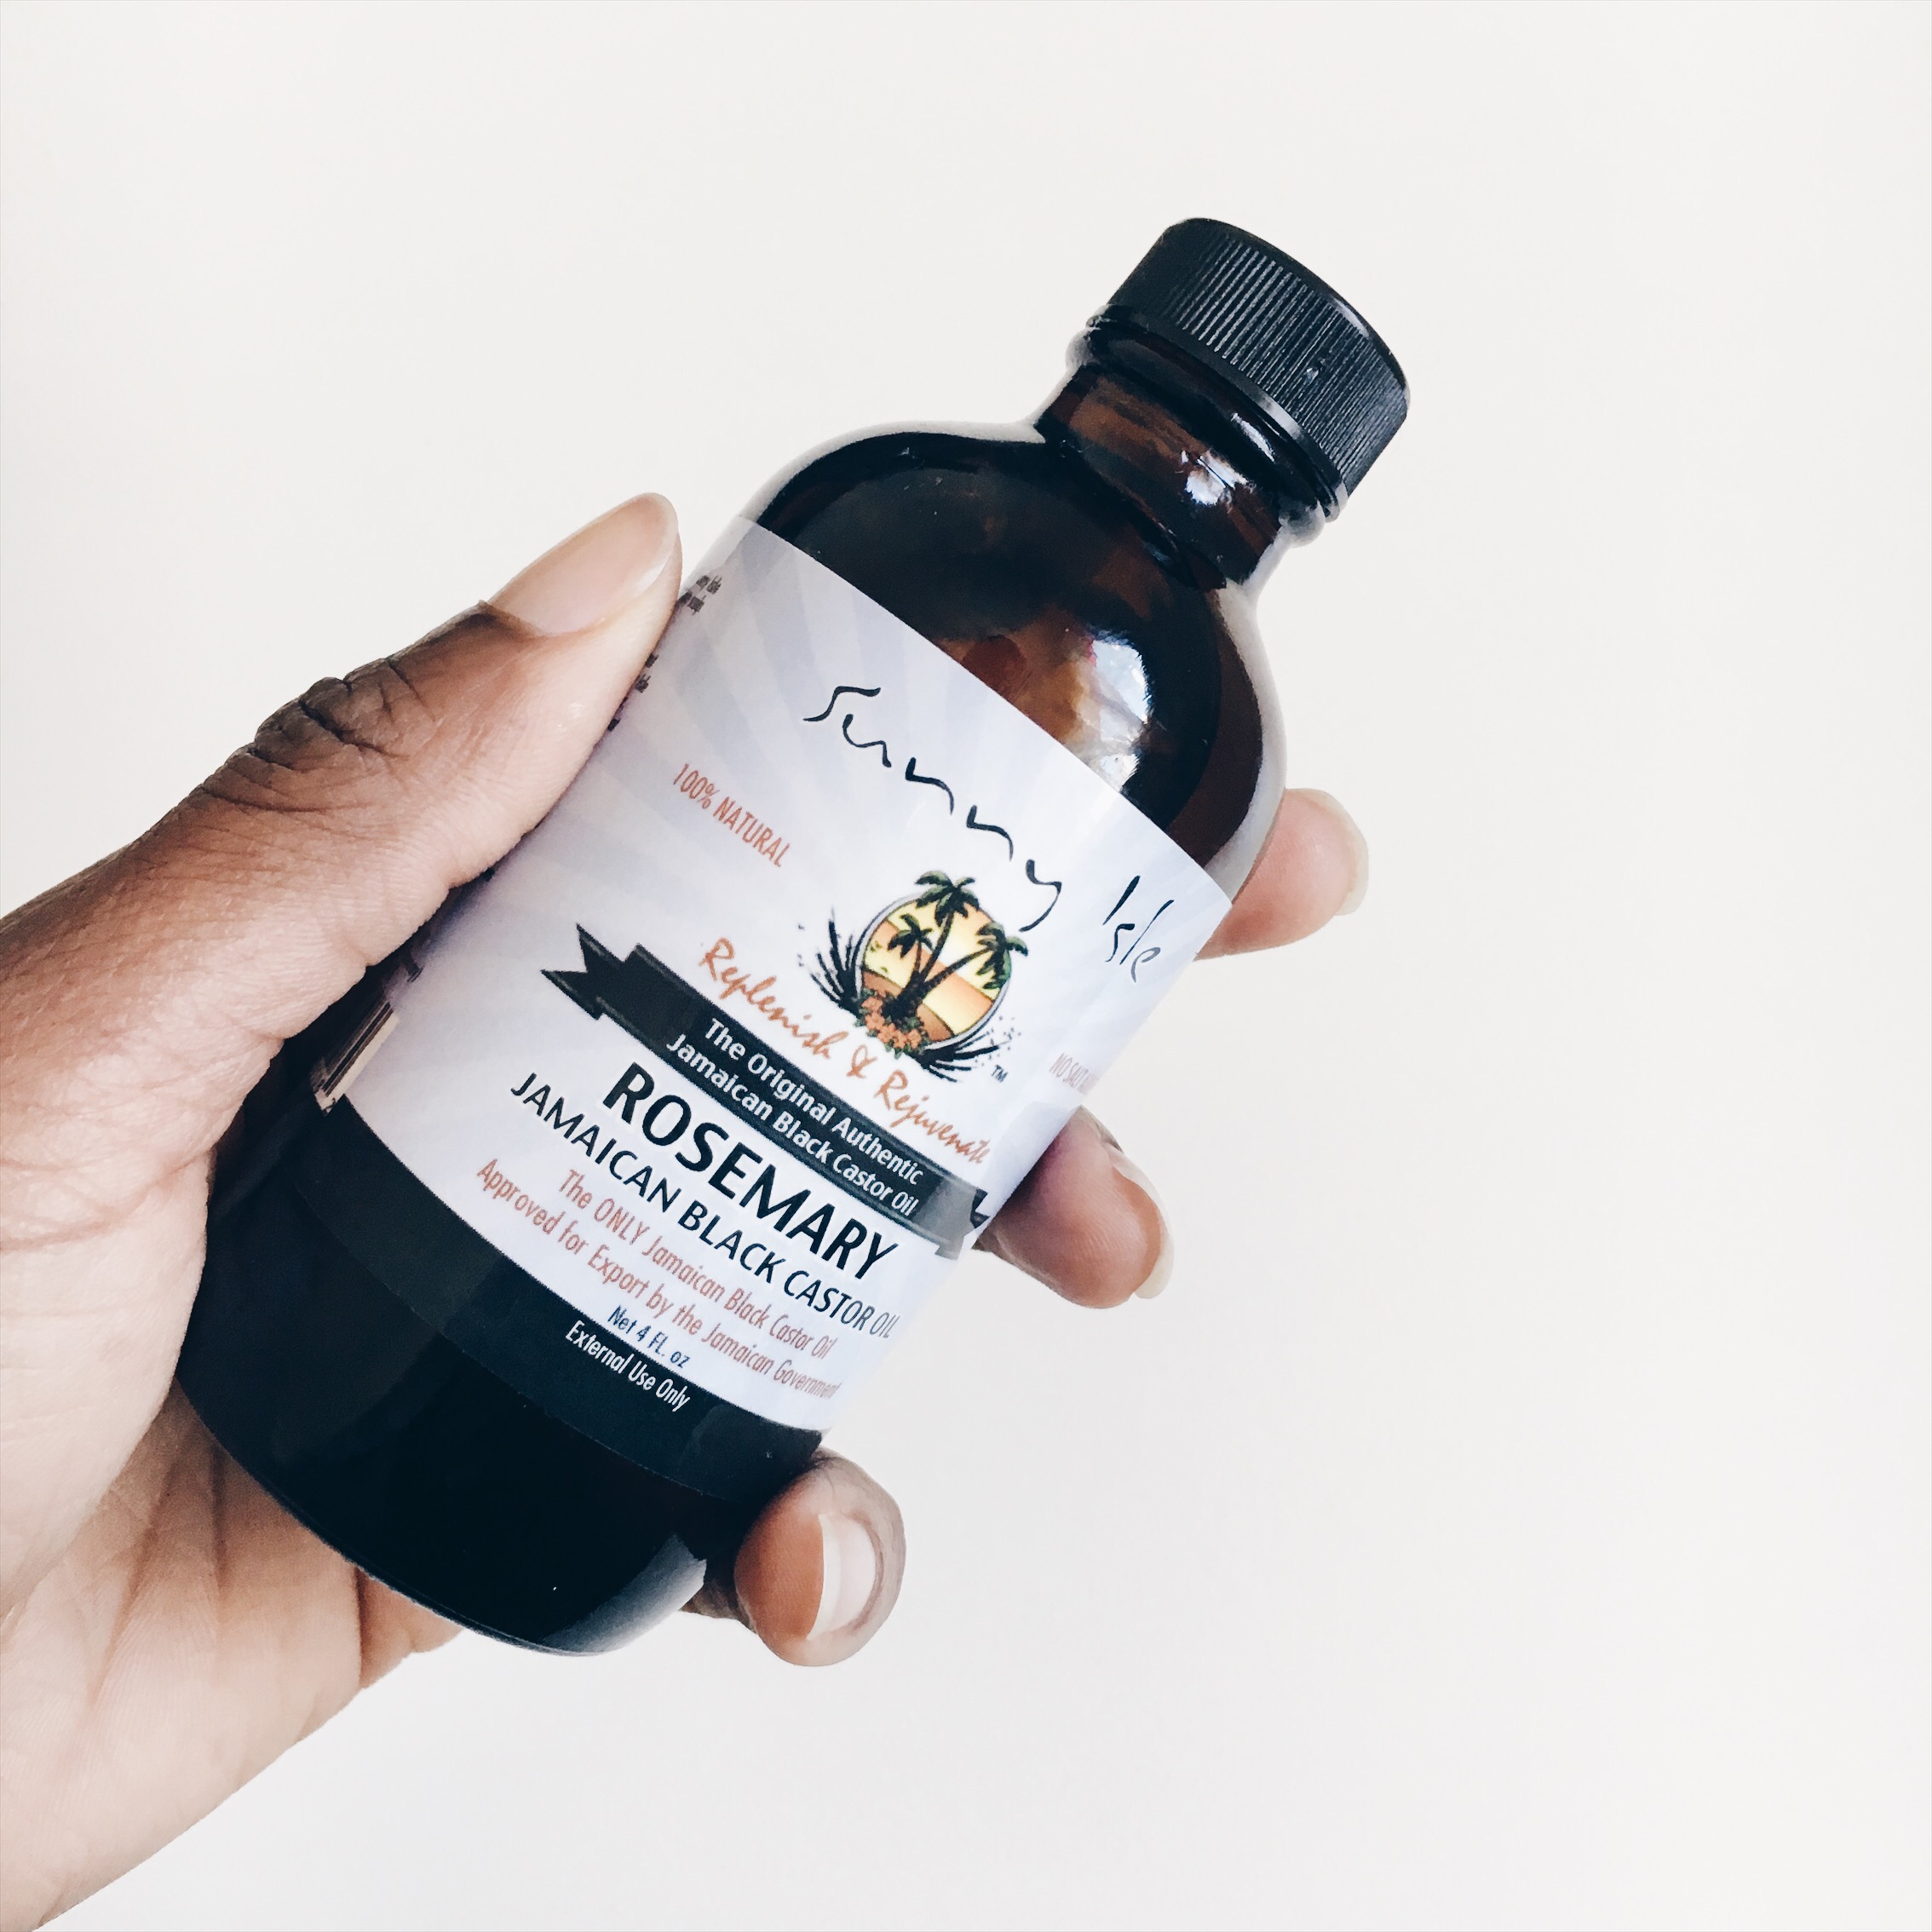 jamaican-black-castor-oil